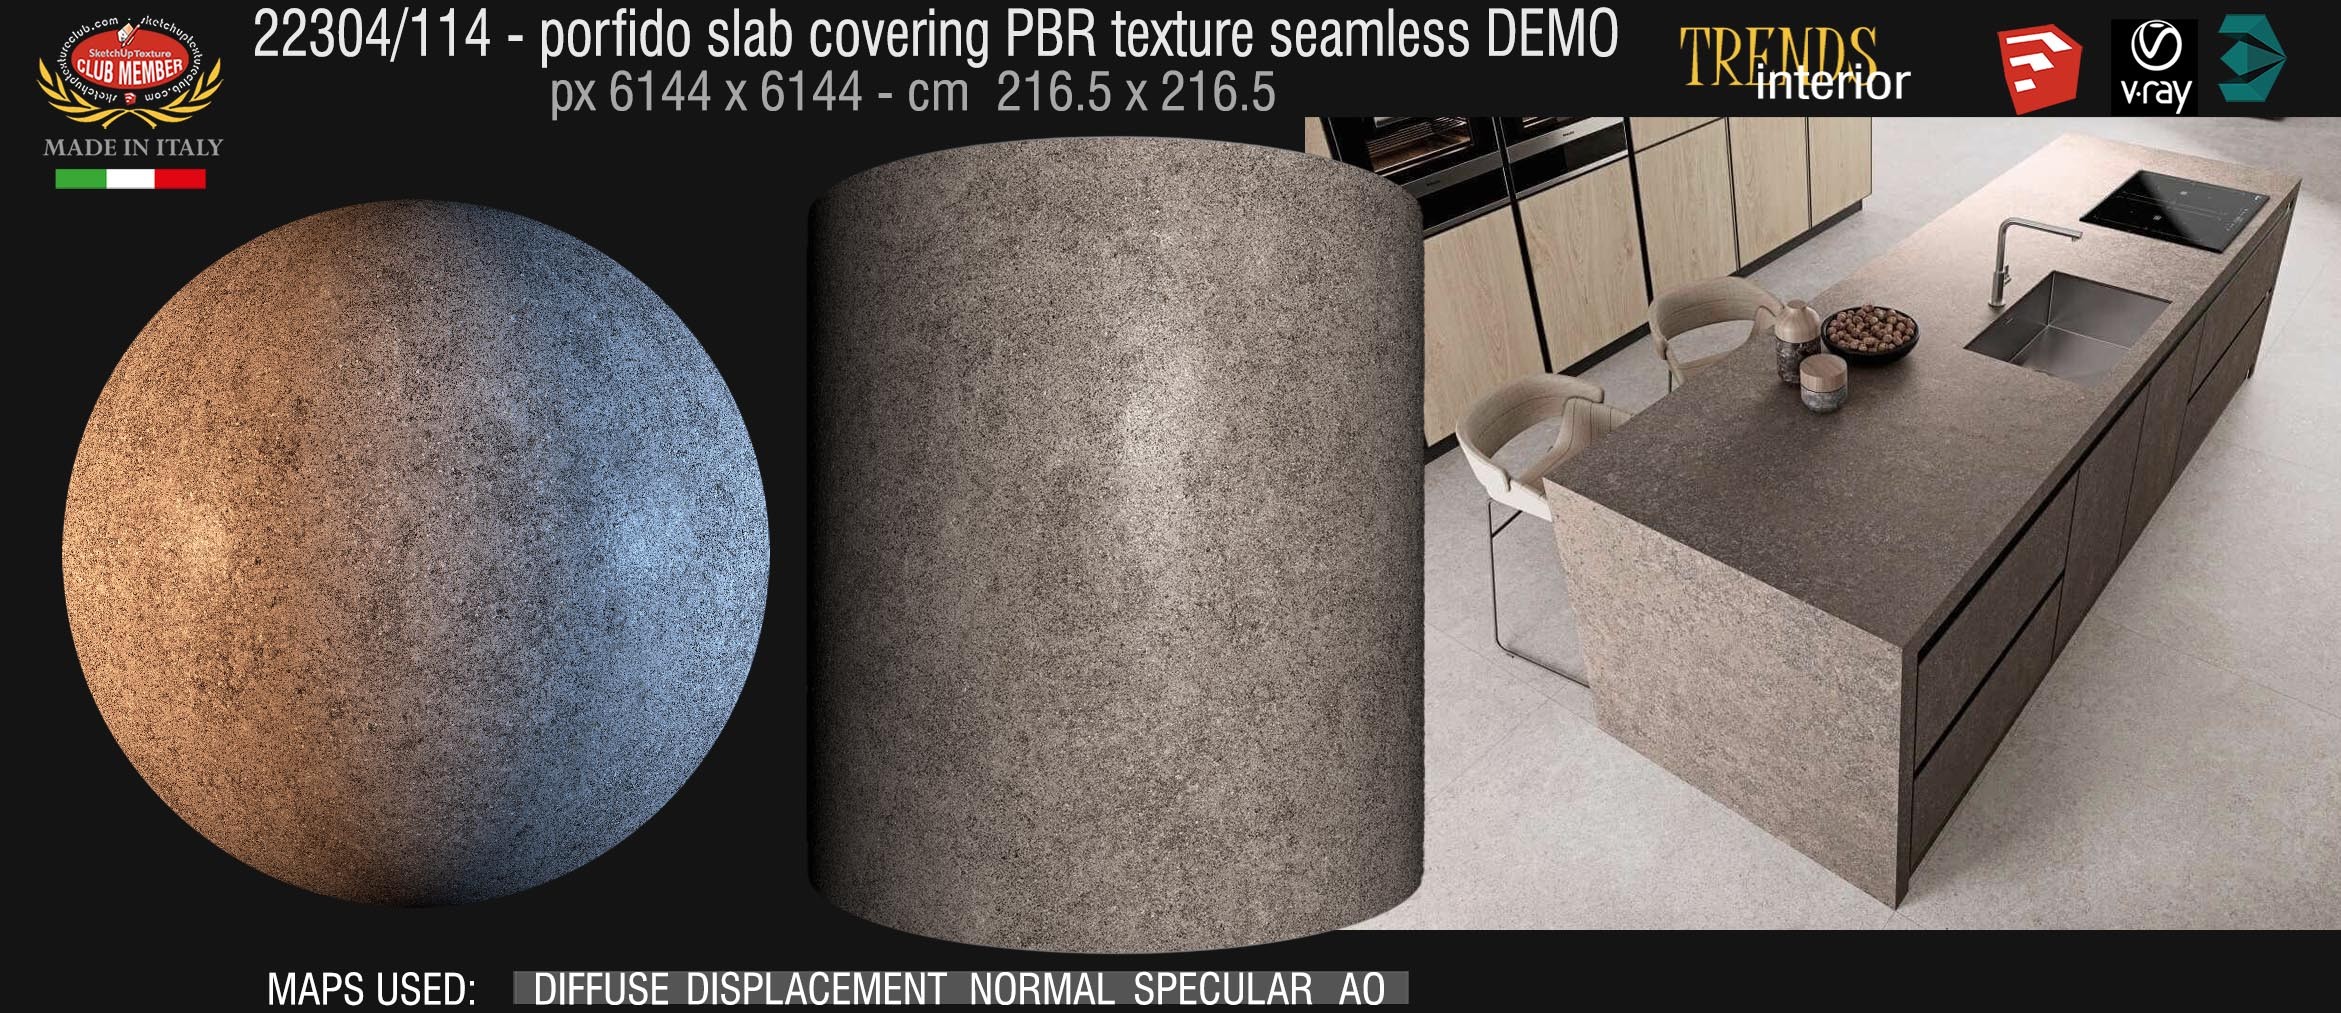 22304_114  Porfido slab covering PBR texture seamless DEMO